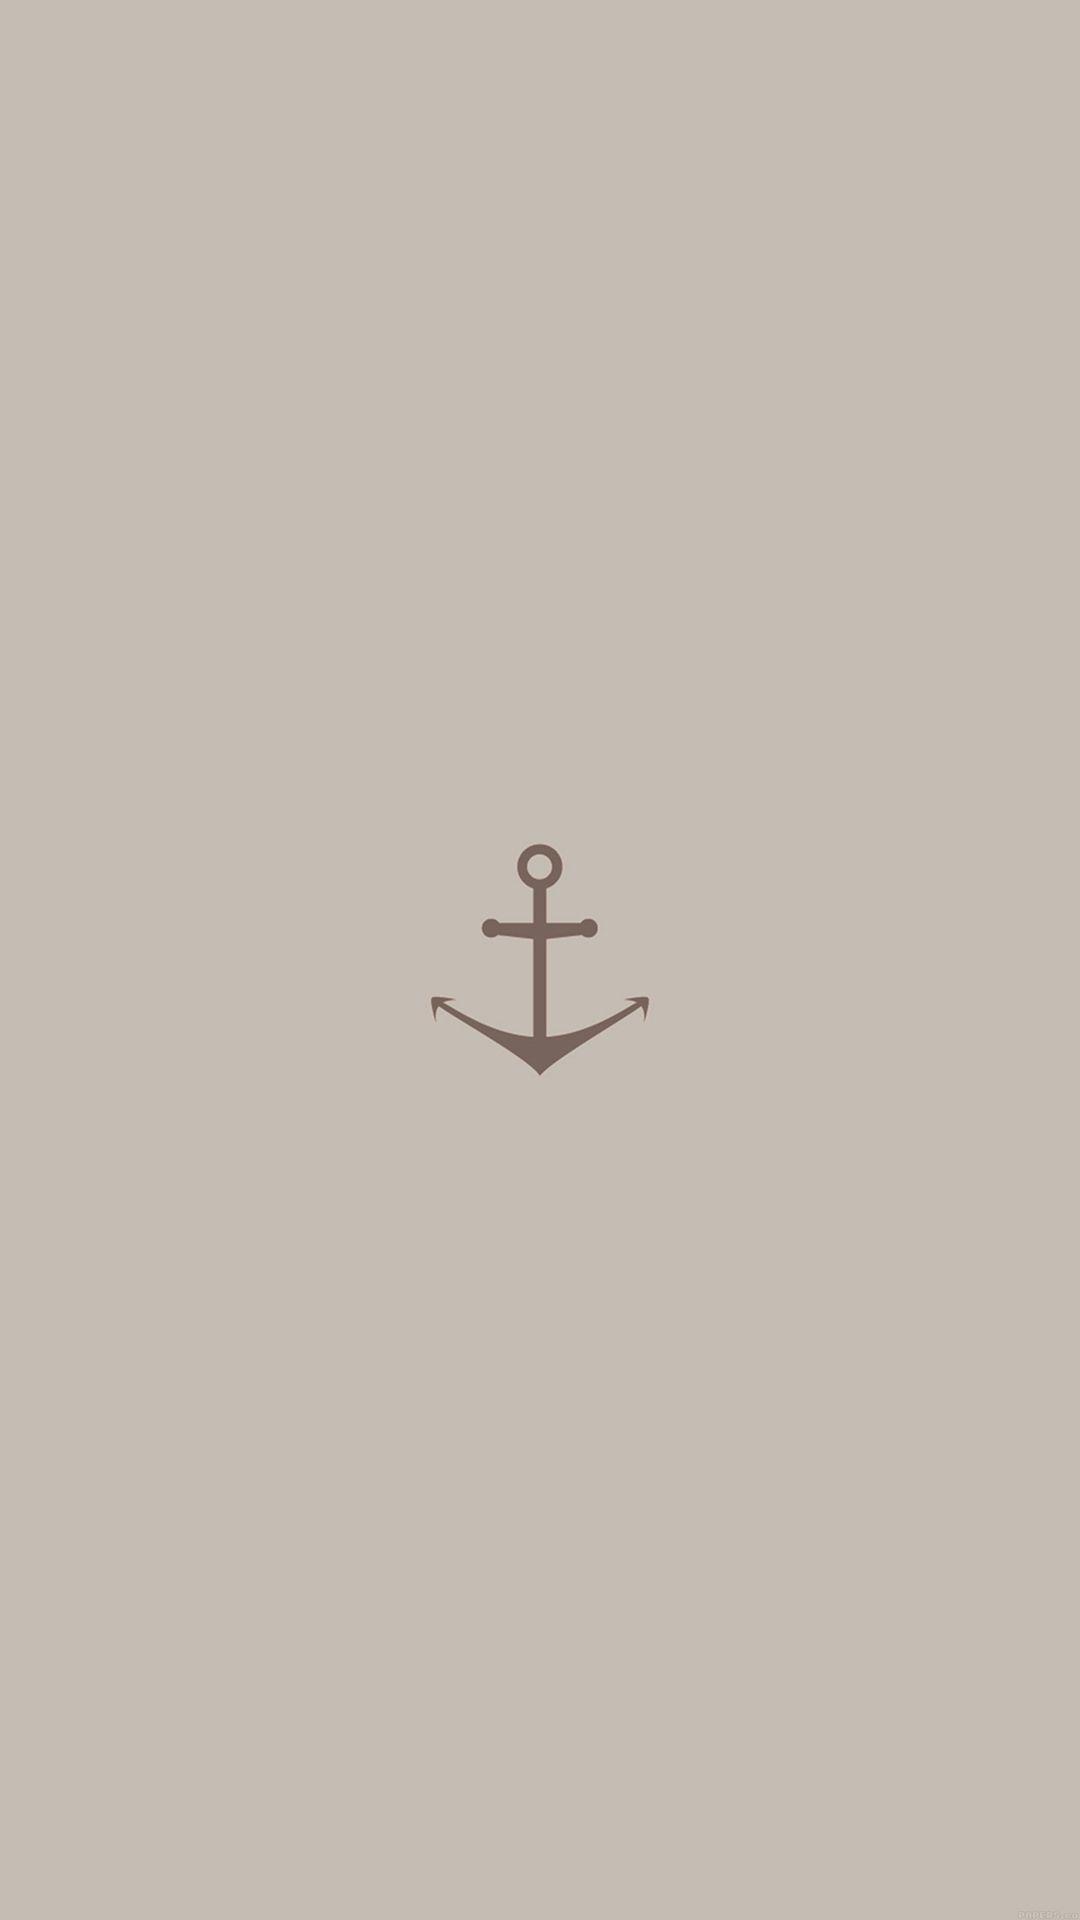 Minimal Sea Anchor Logo Red Art iPhone 8 Wallpaper Download